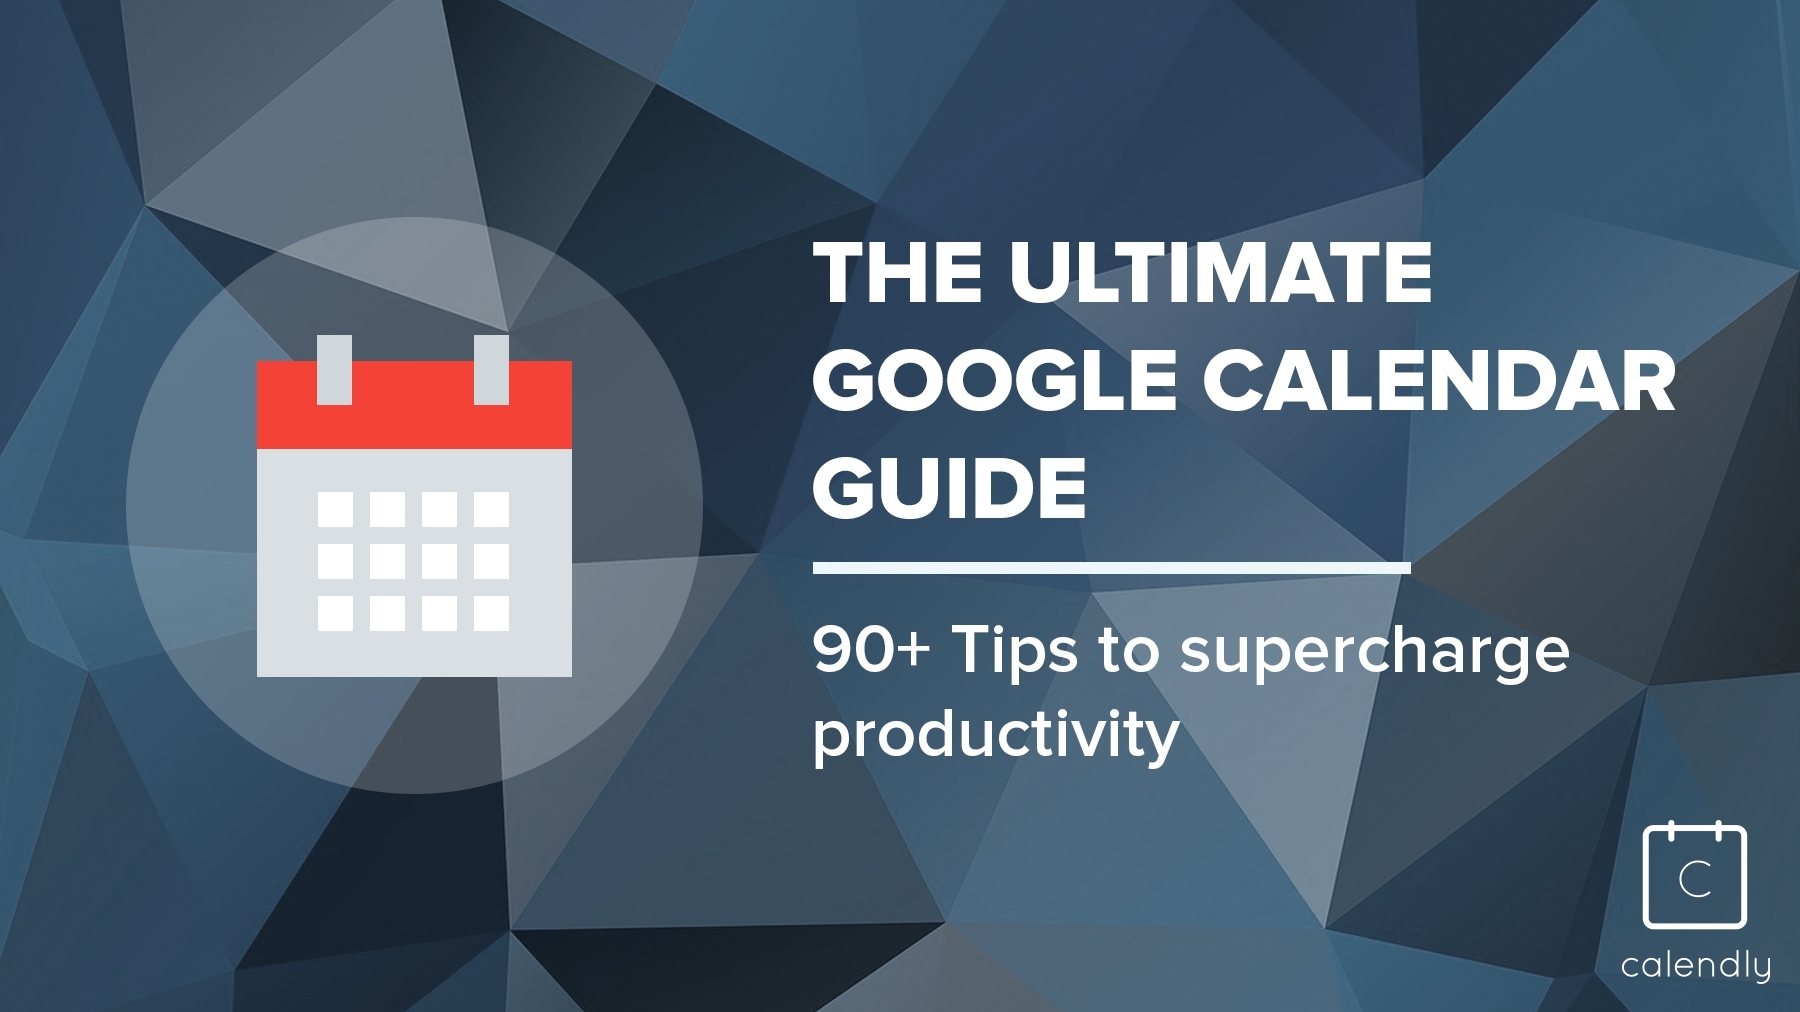 Blog - The Ultimate Google Calendar Guide: 90+ Tips